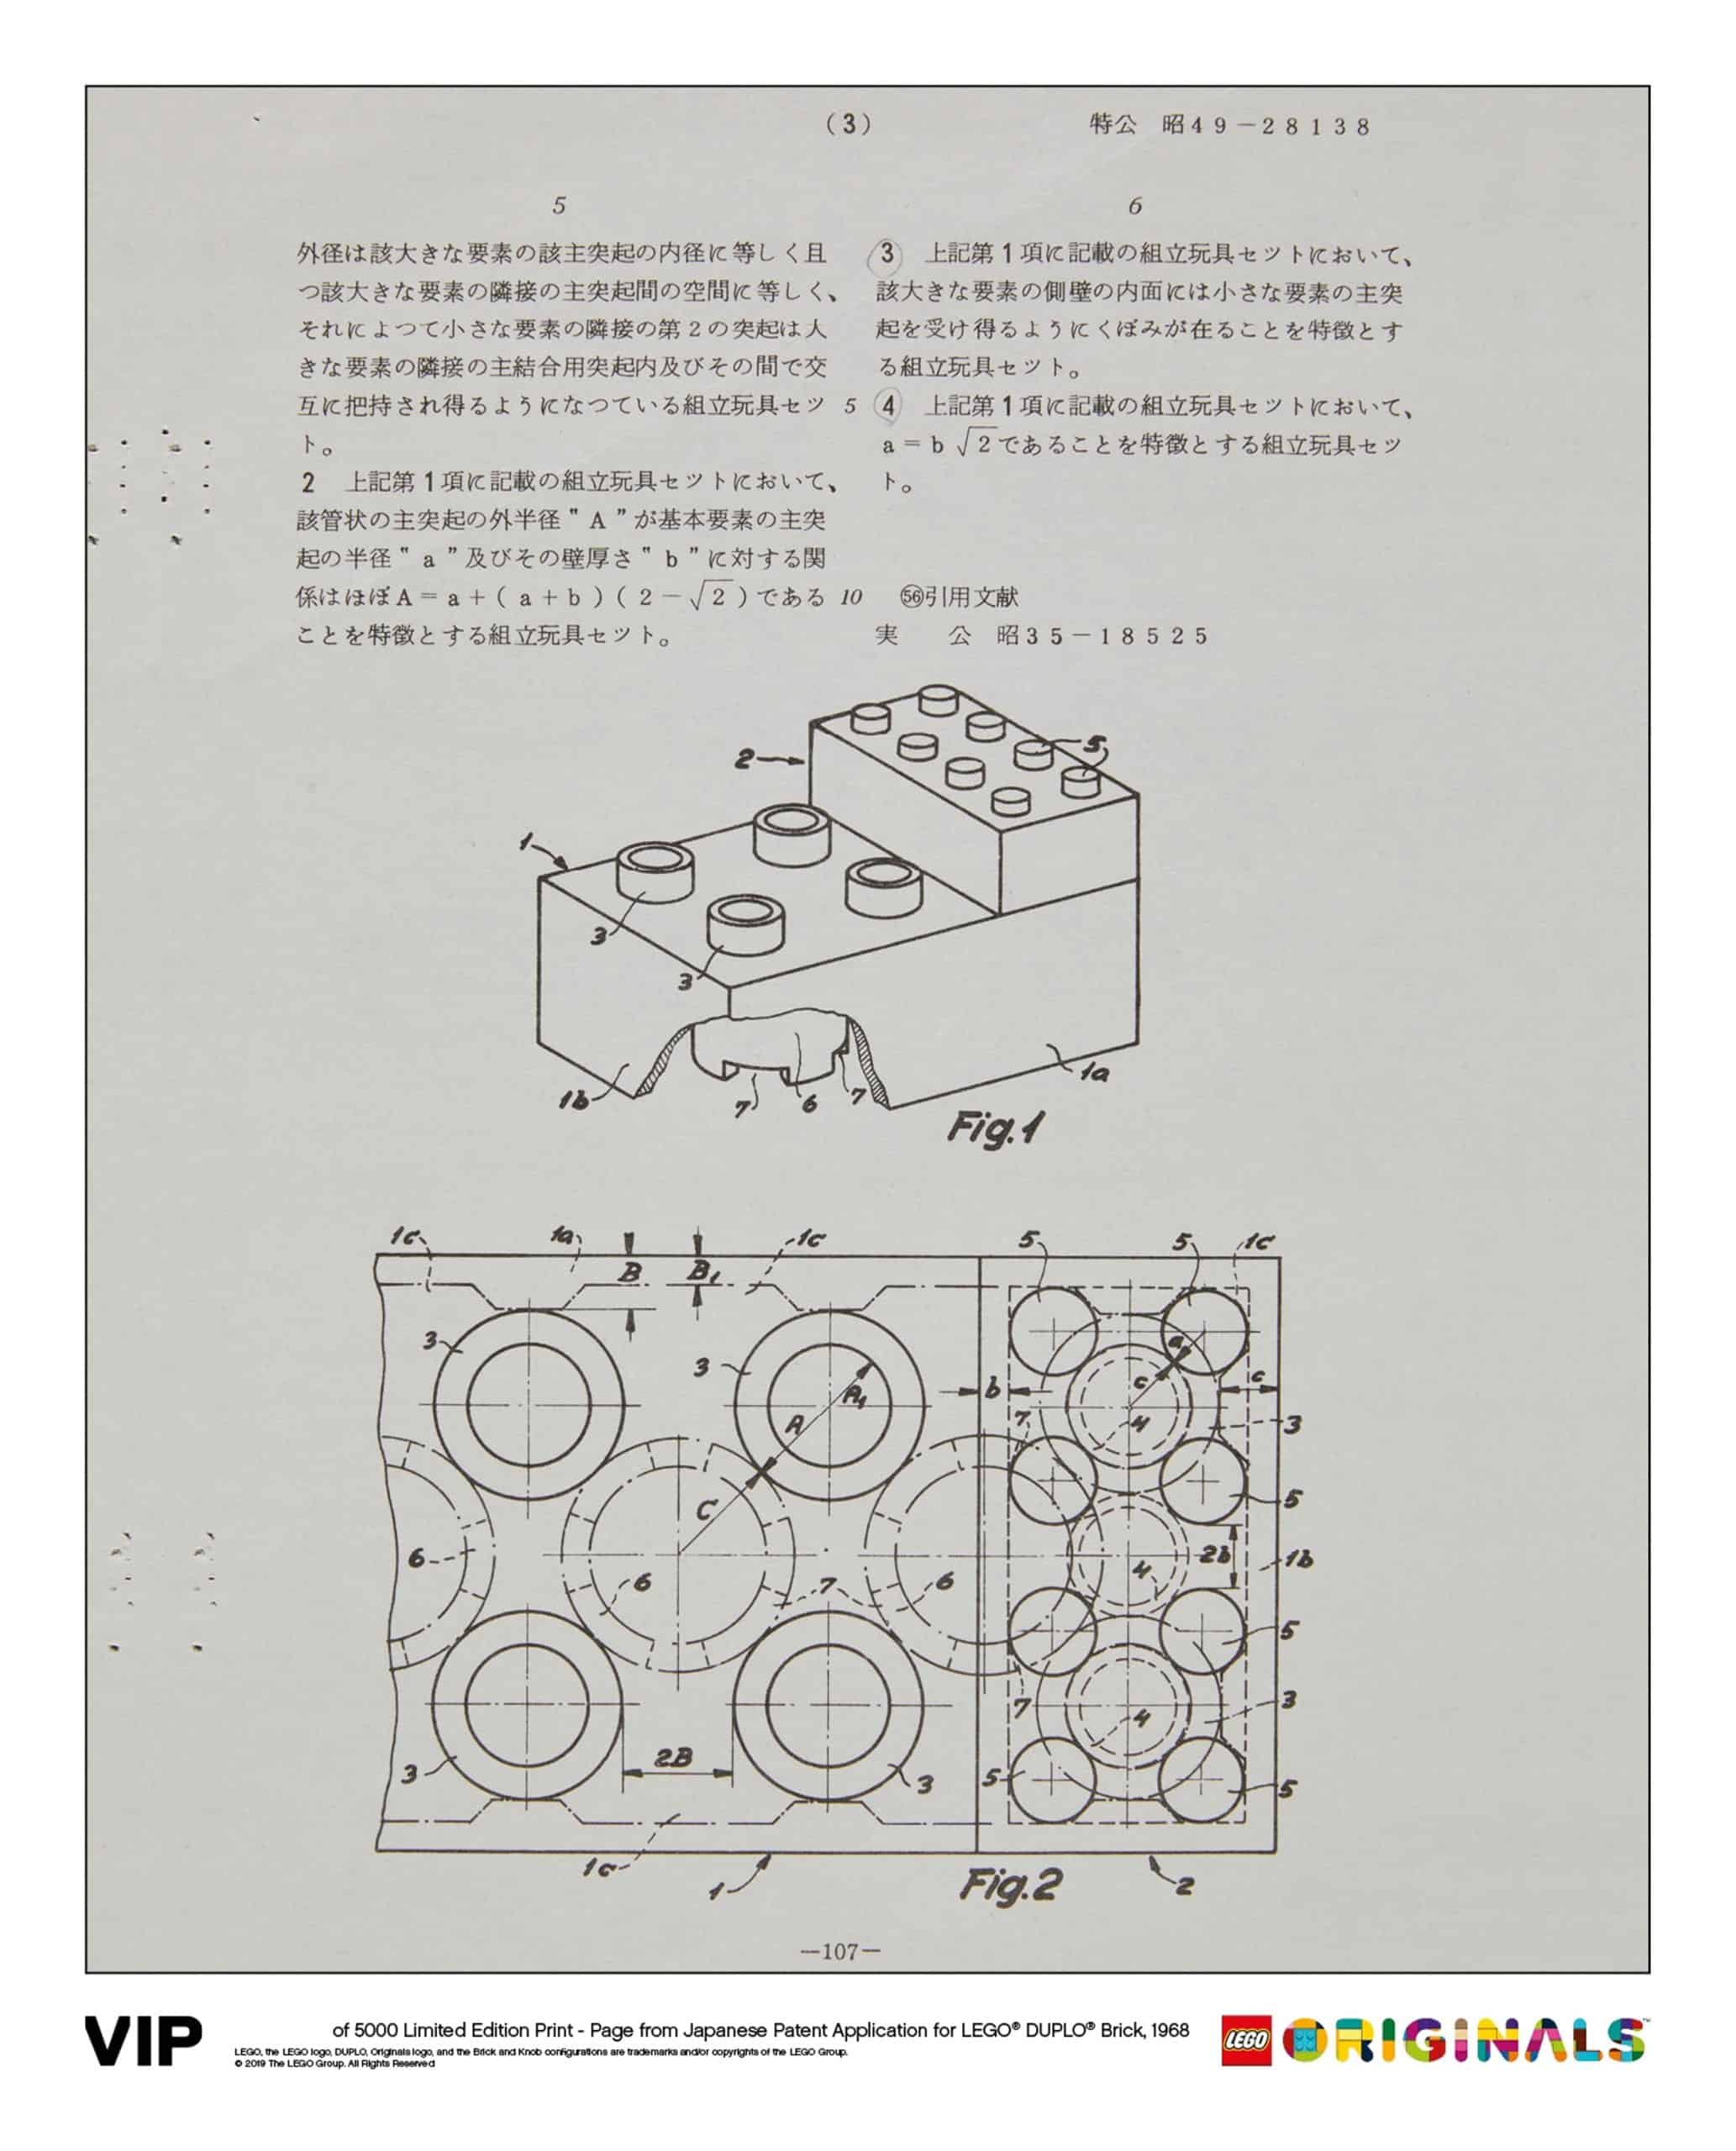 japanese patent duplo 5006007 brick 1968 scaled